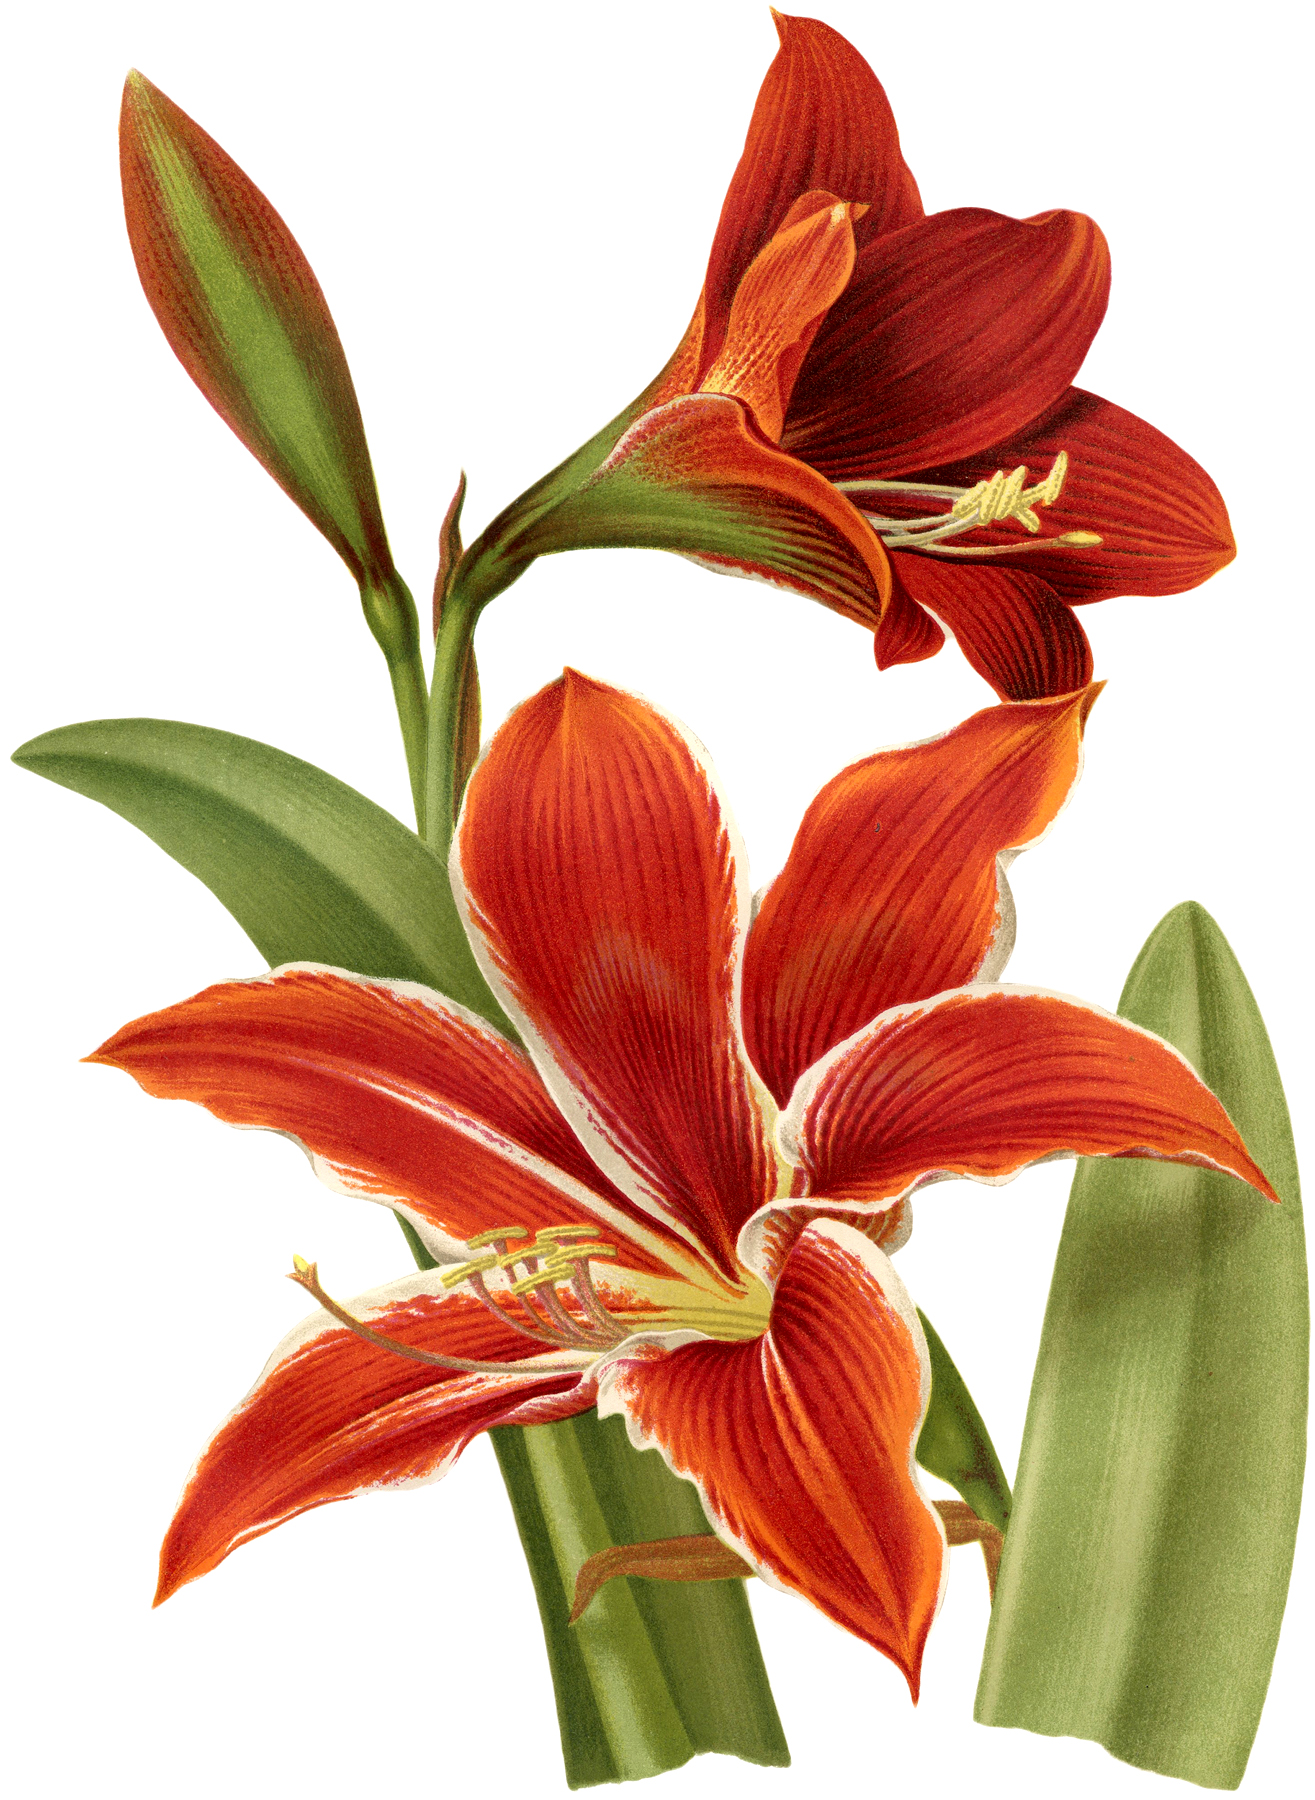 3-amaryllis-images-printable-botanicals-the-graphics-fairy